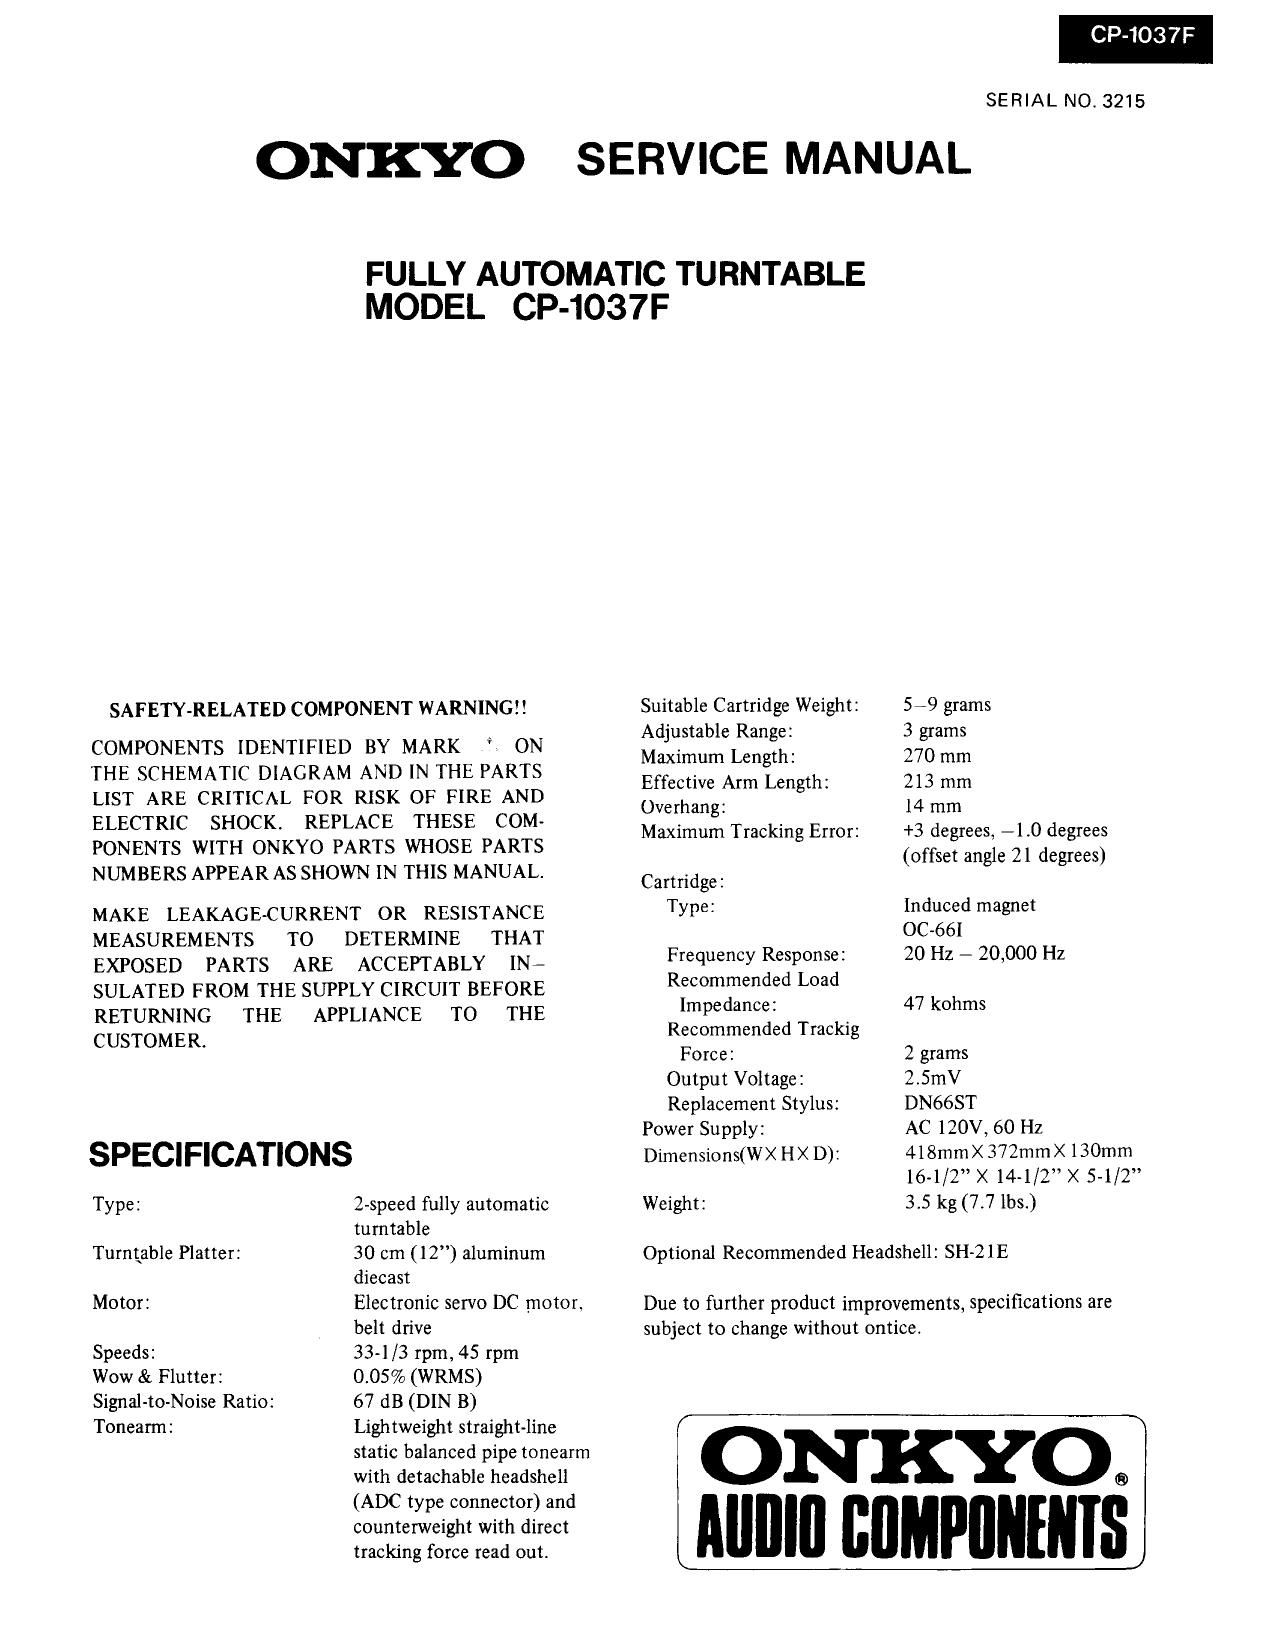 Onkyo CP 1037 F Service Manual